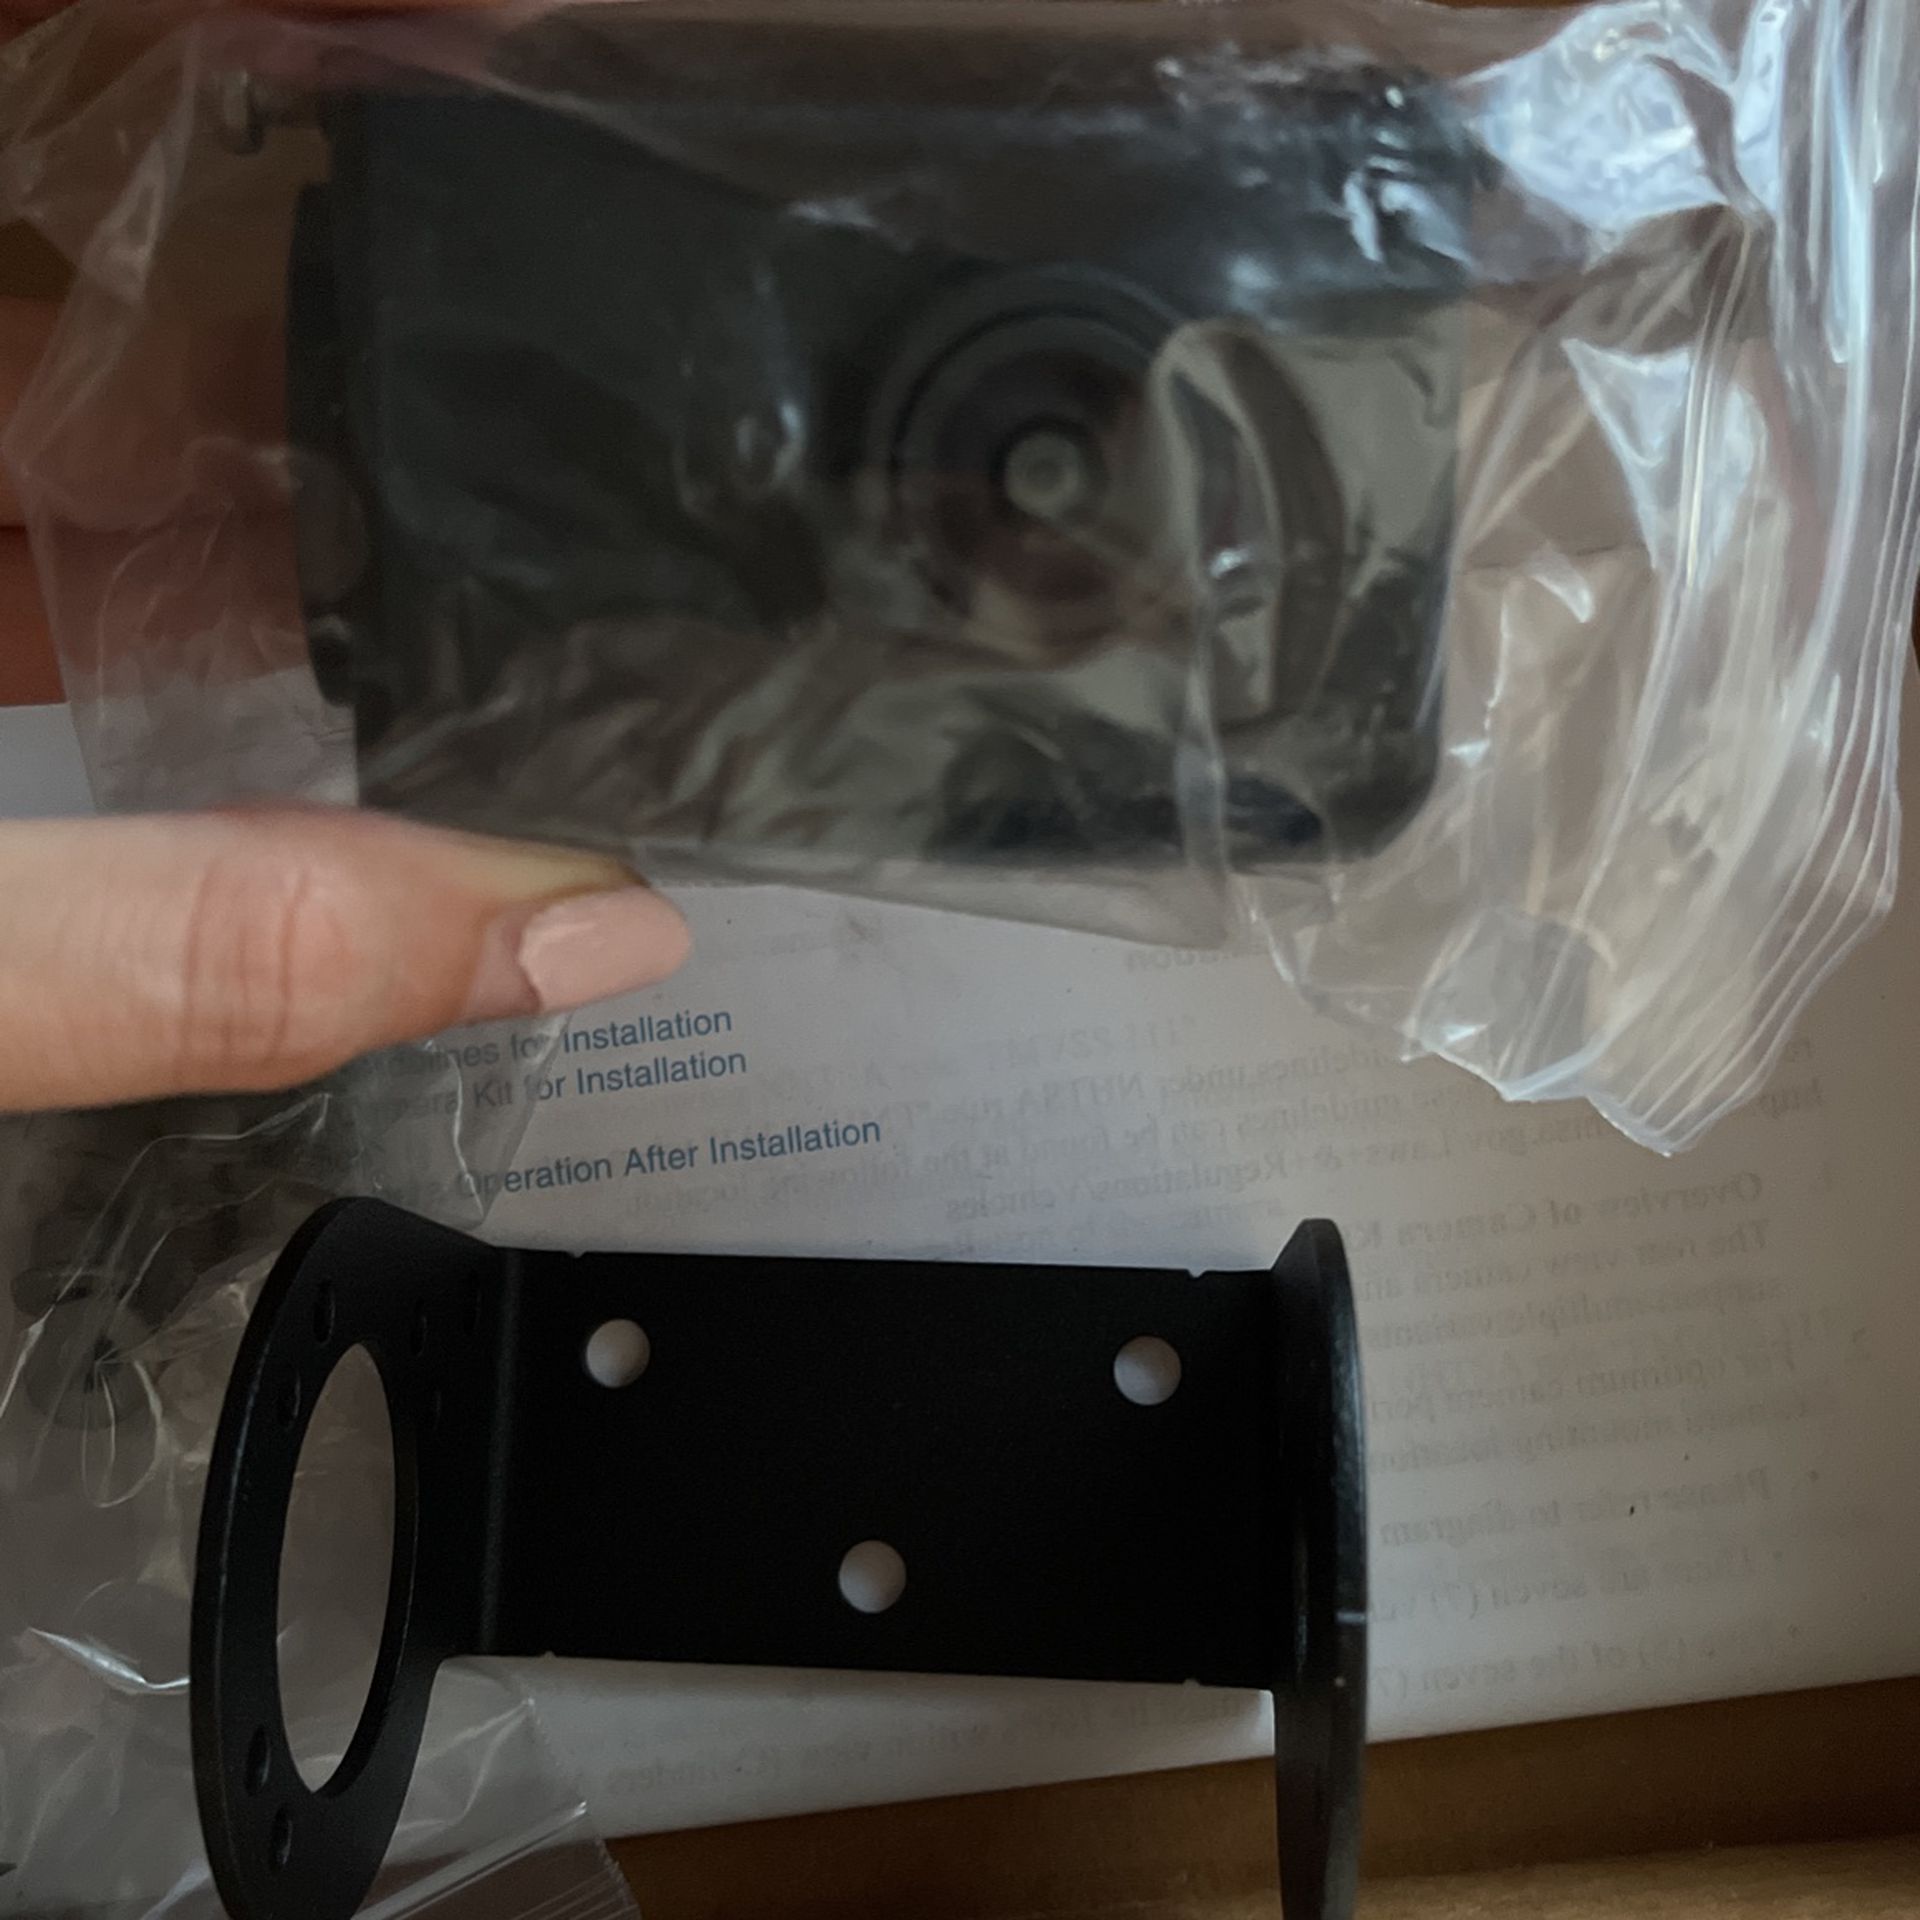 Ford OEM Trailer Camera Tire Pressure Monitoring System Kit